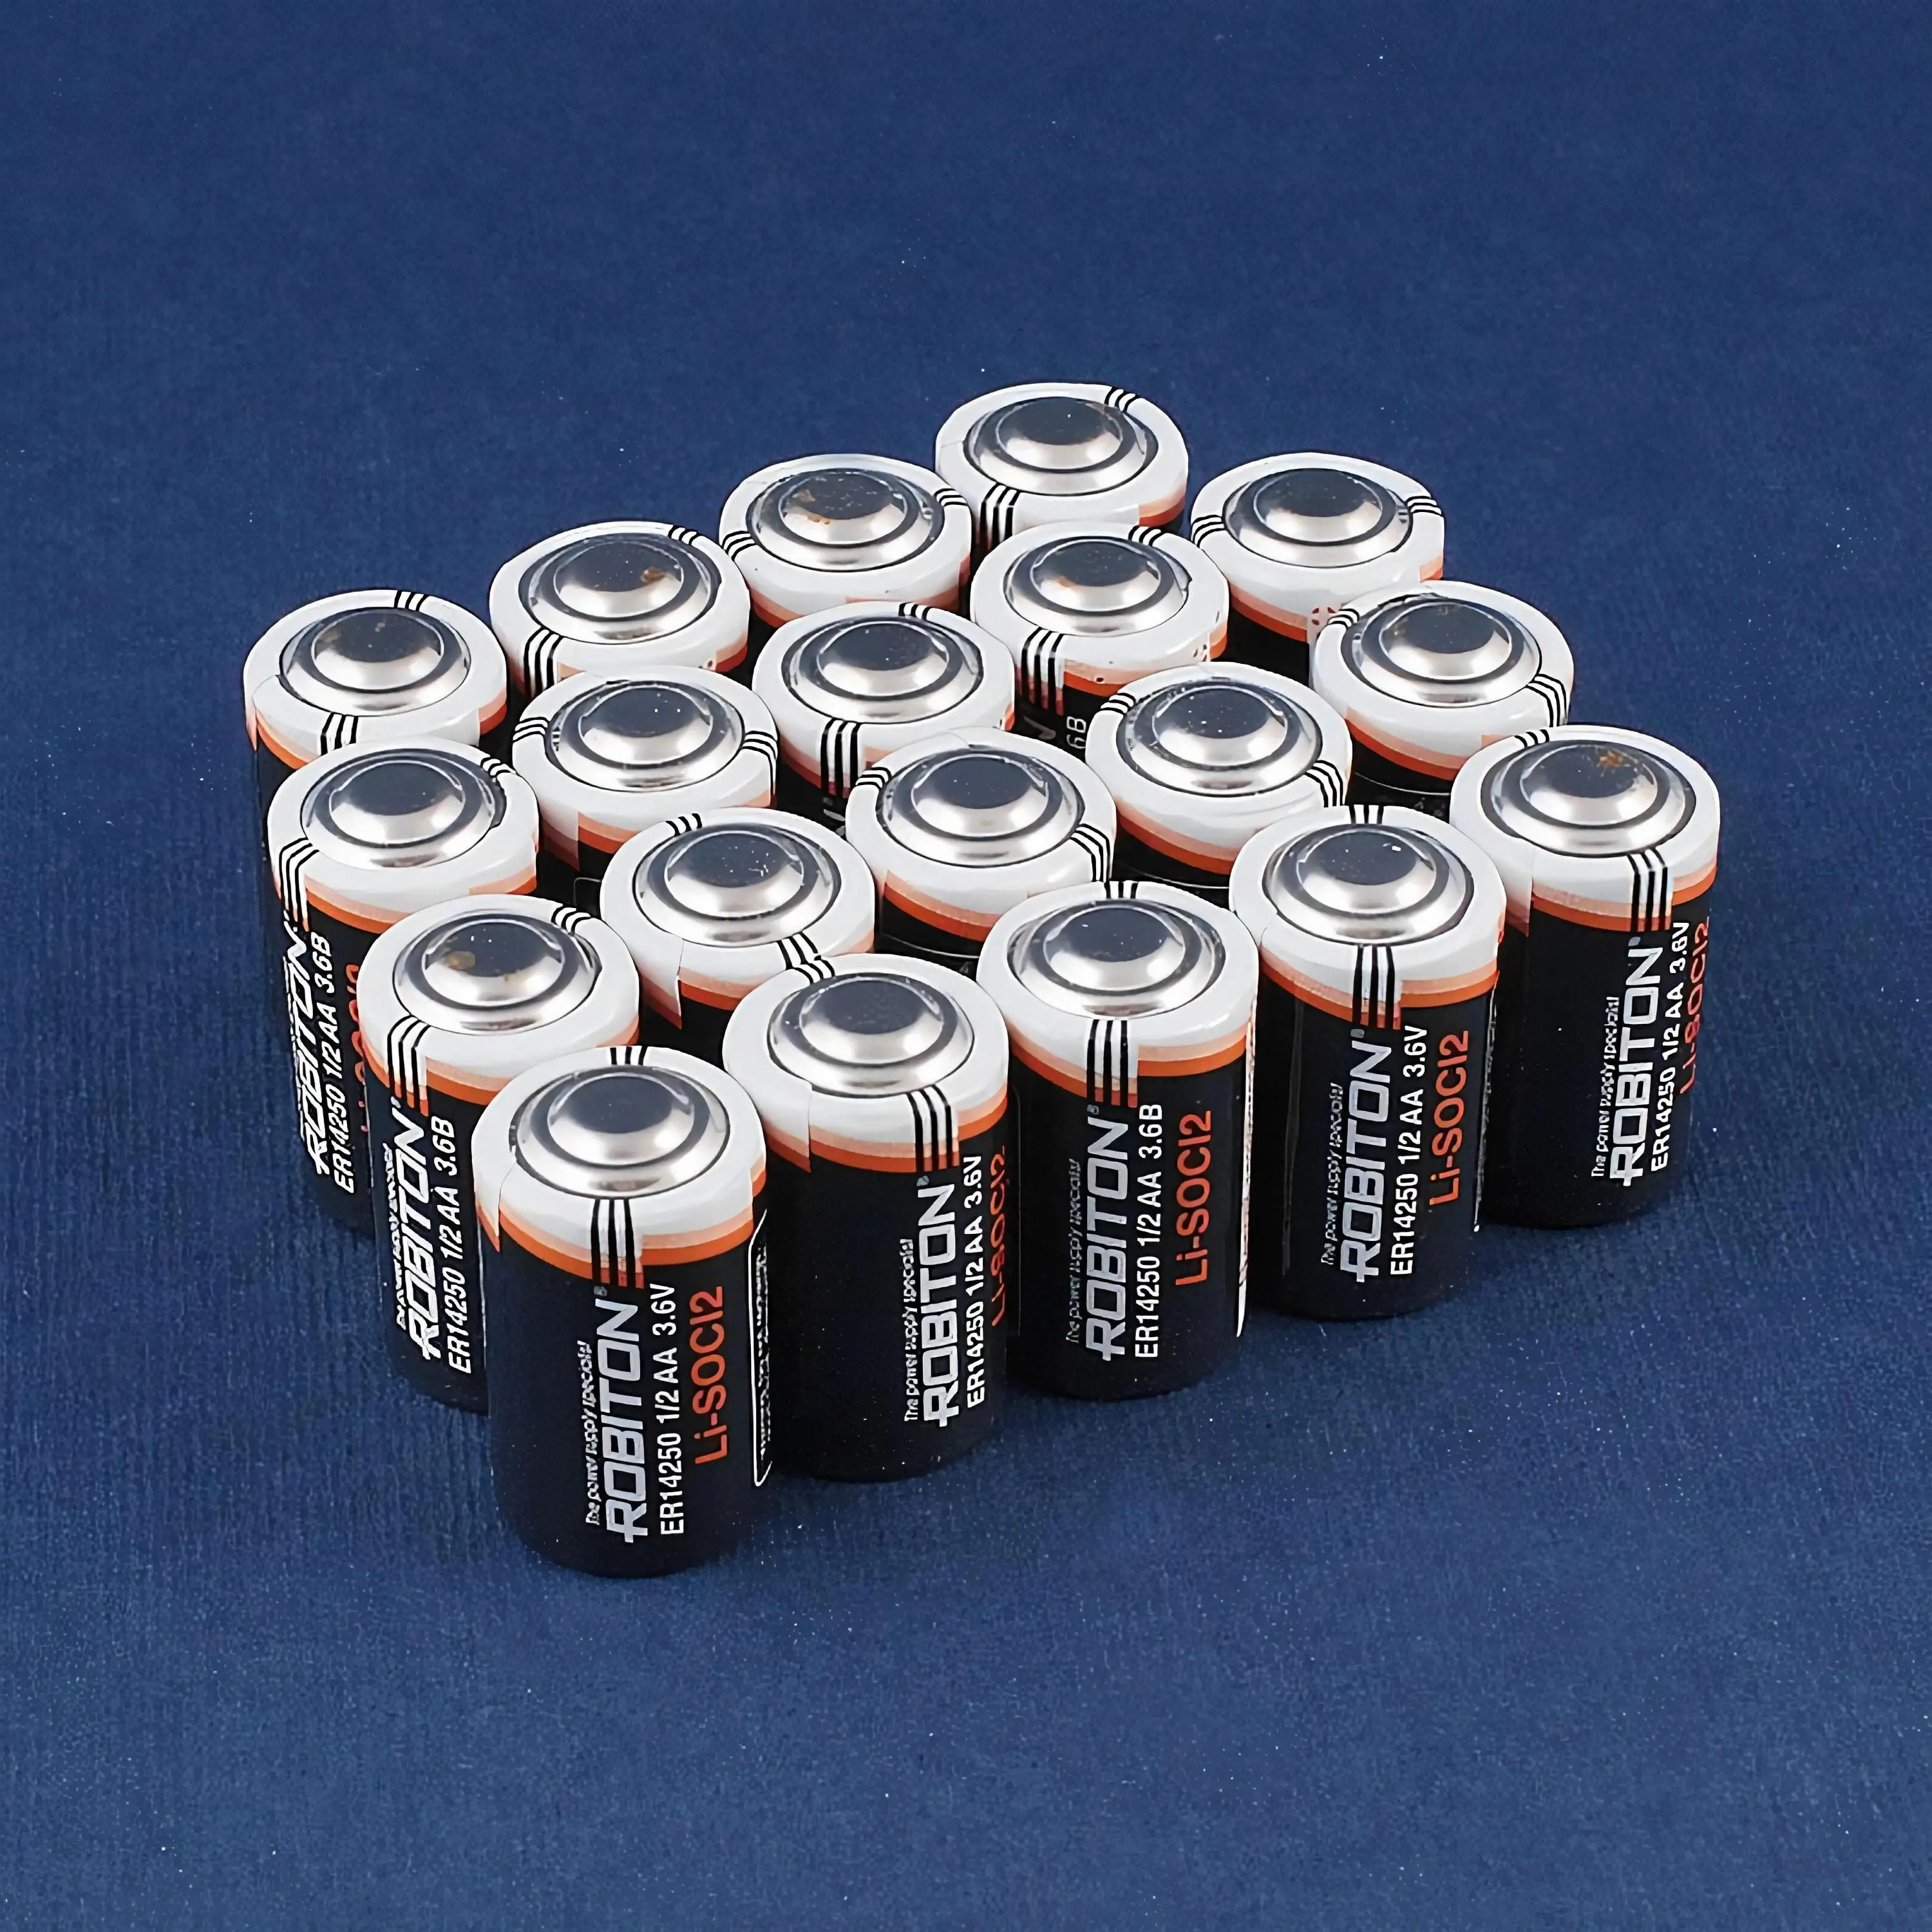 Battery type